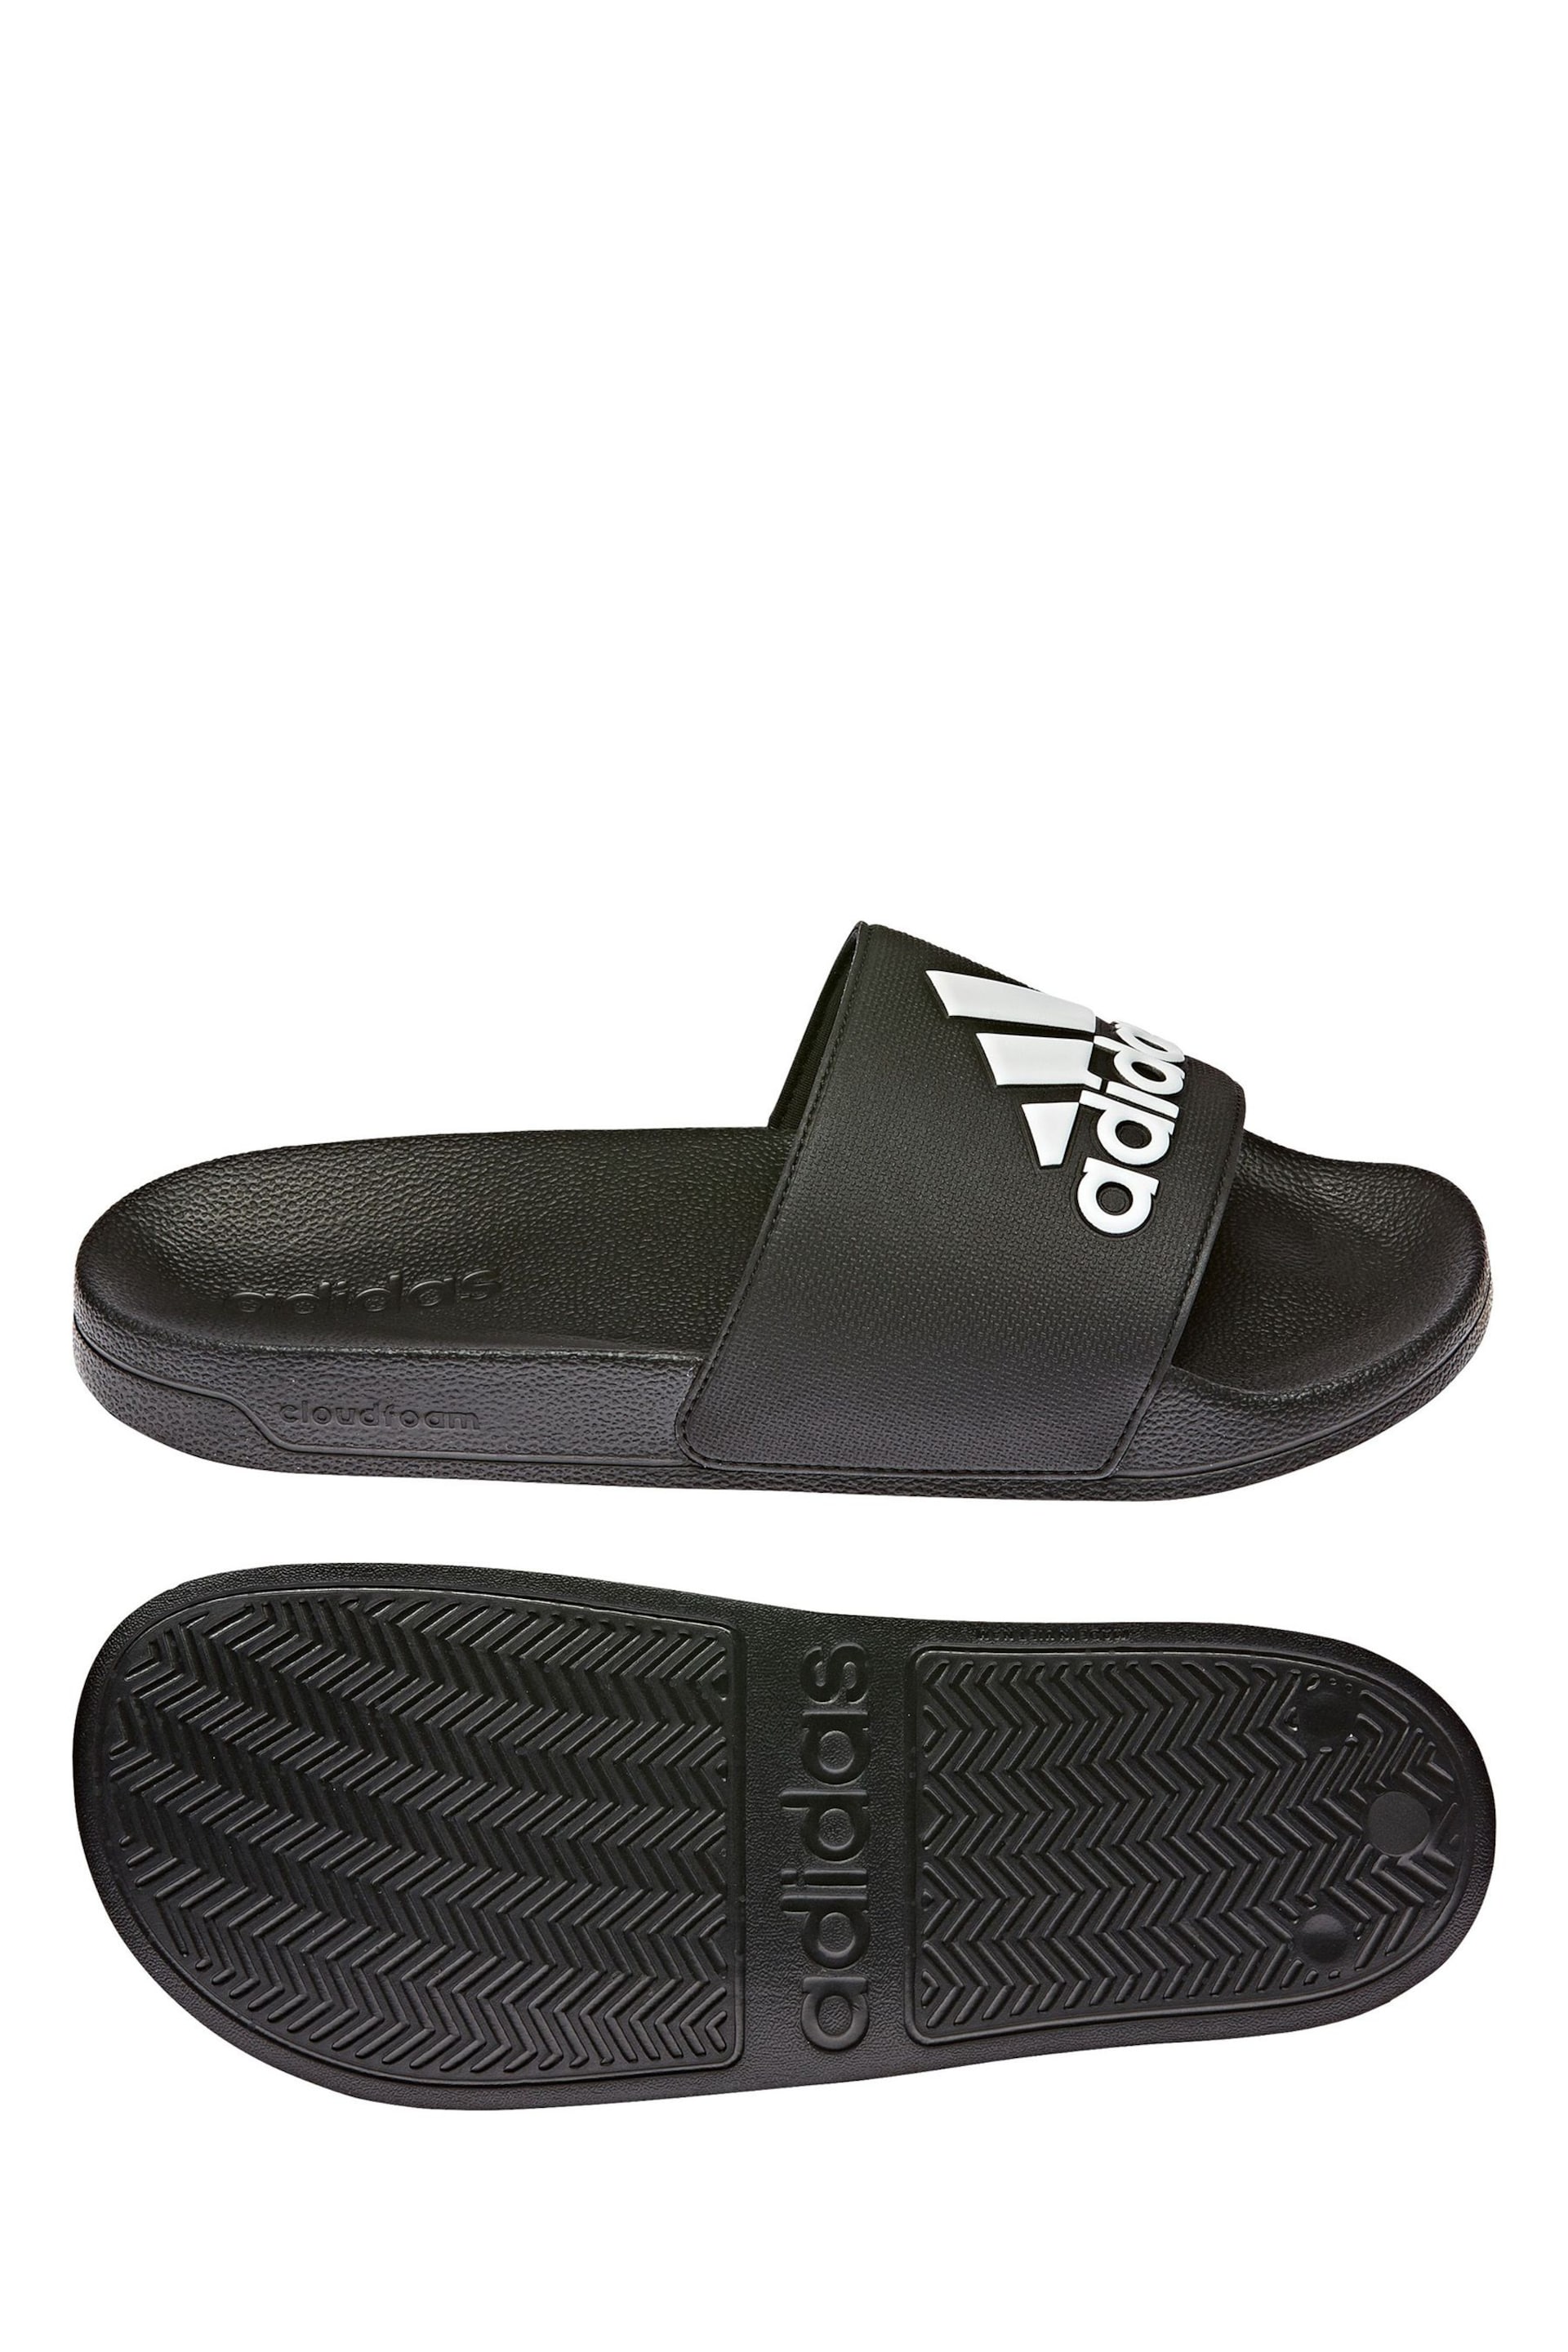 adidas Black Sportswear Adilette Shower Slides - Image 2 of 10